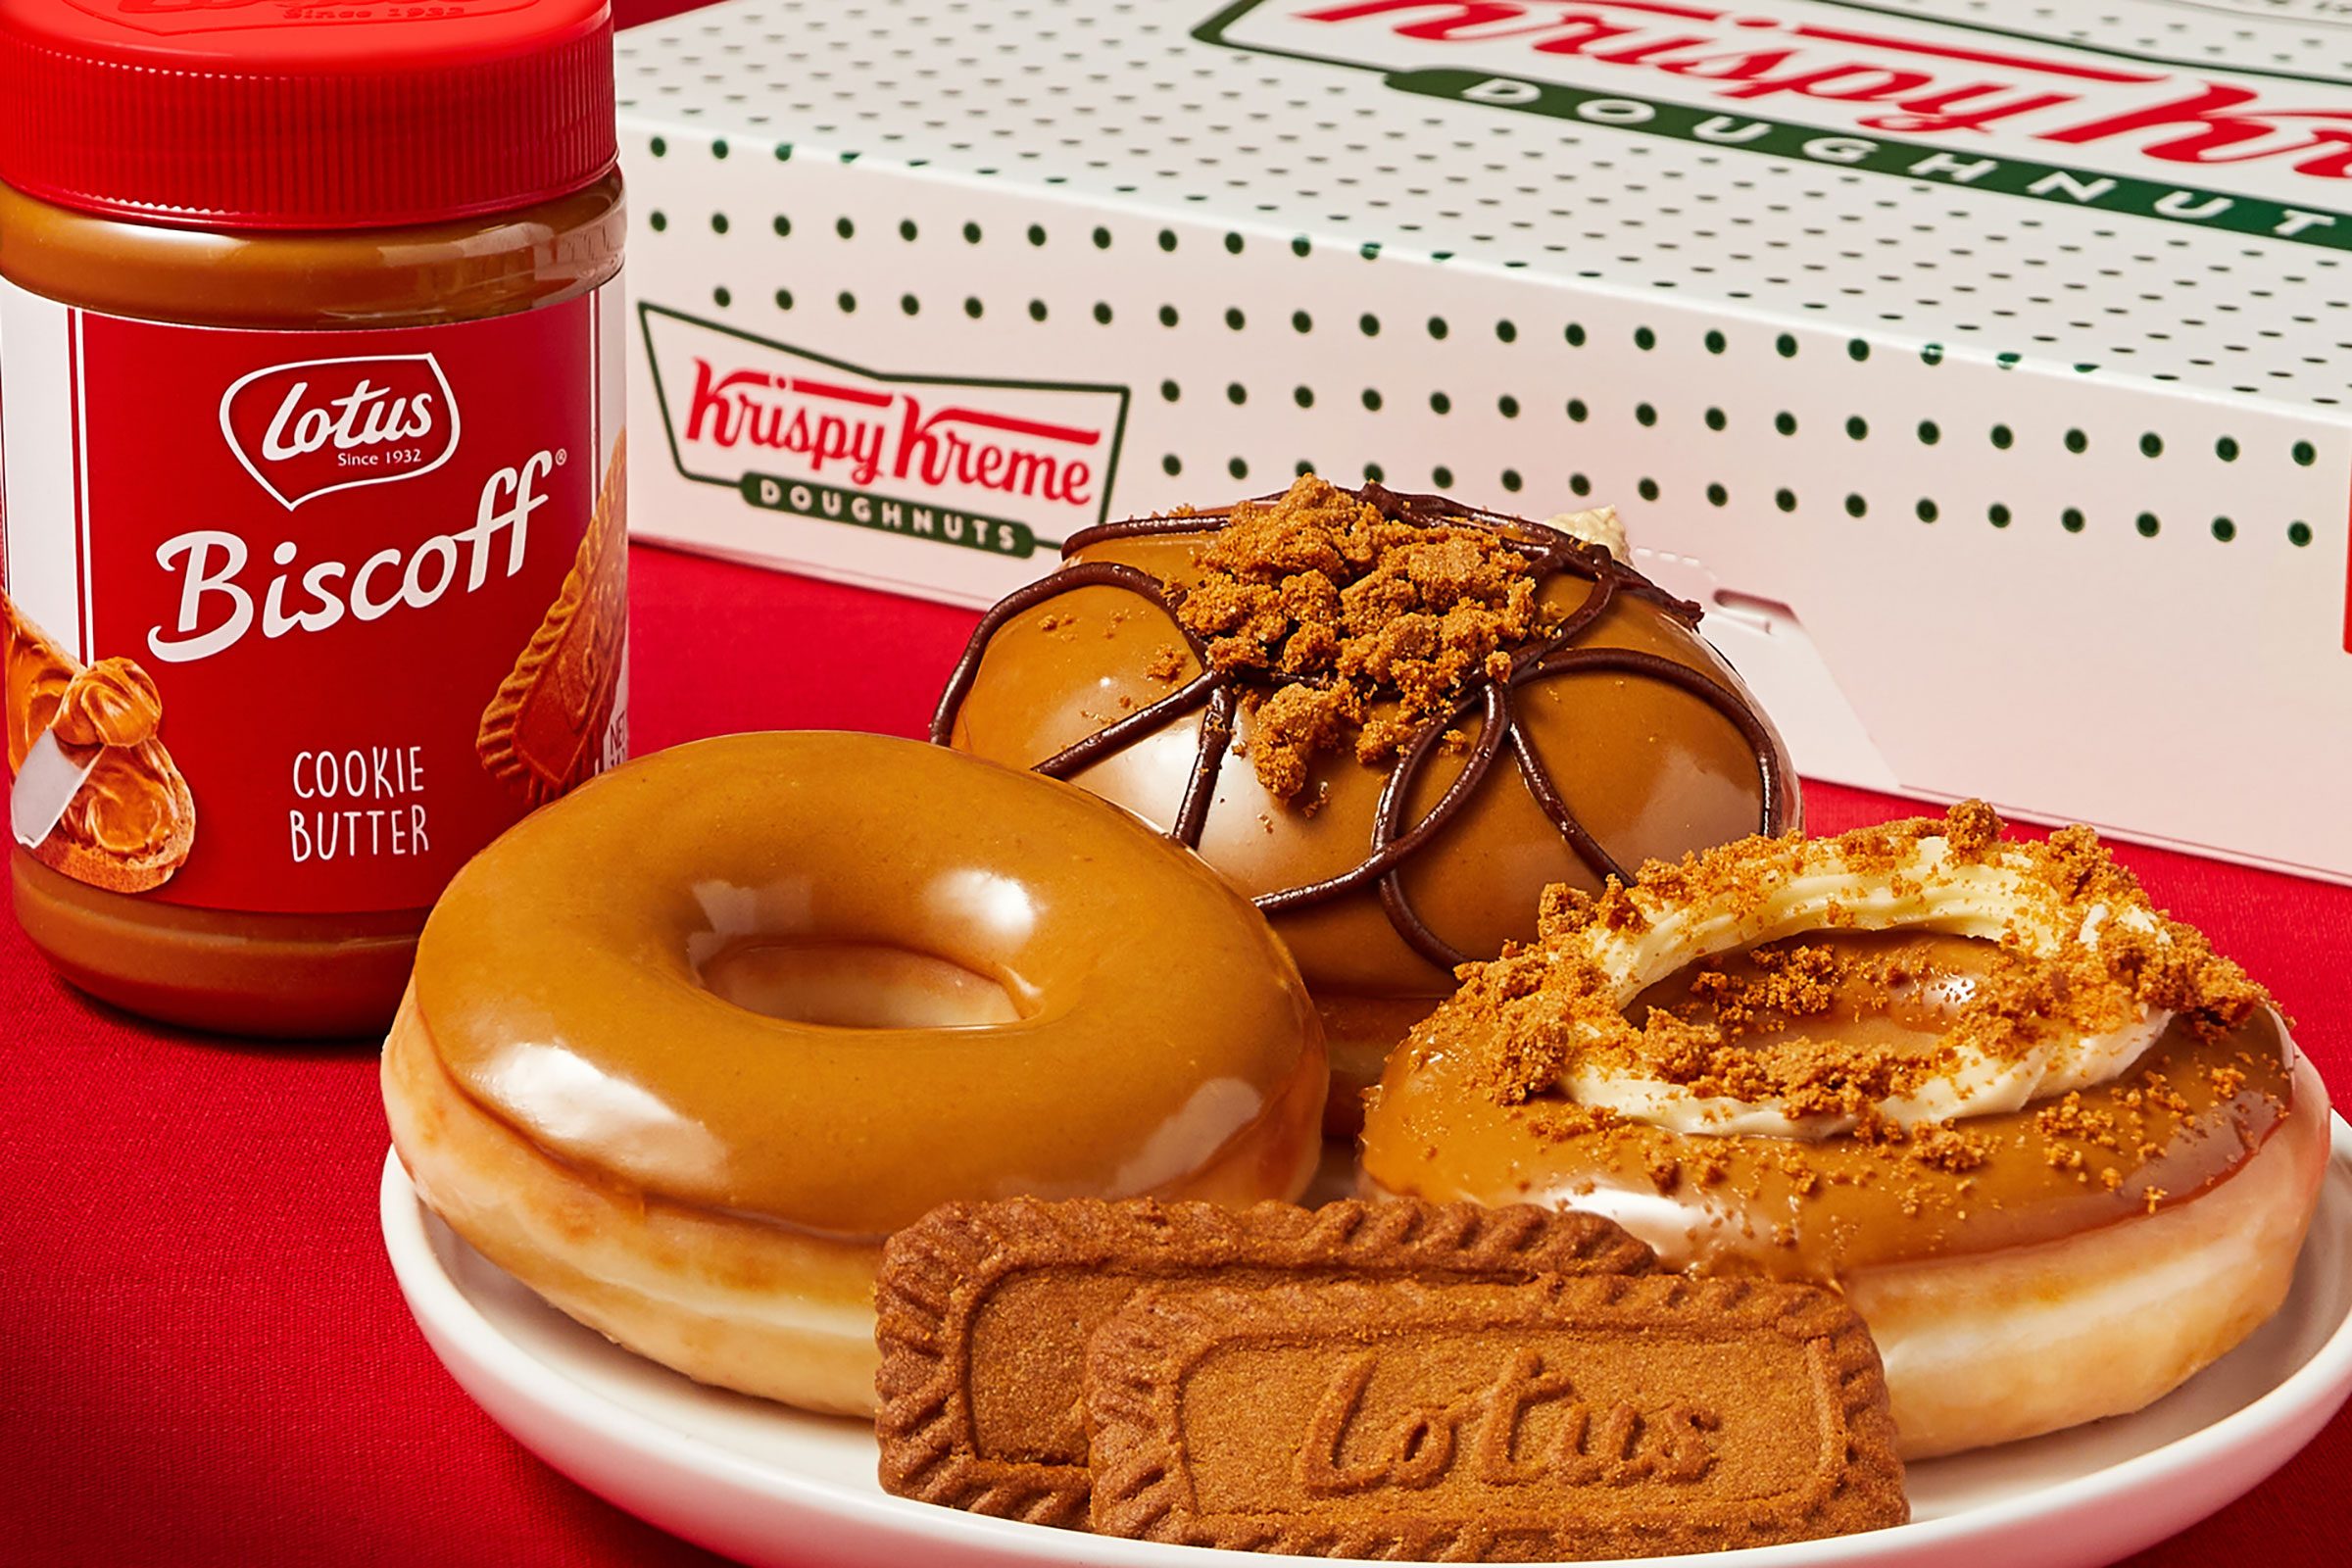 Krispy Kreme Has a New Line of Lotus Biscoff Doughnuts and We're